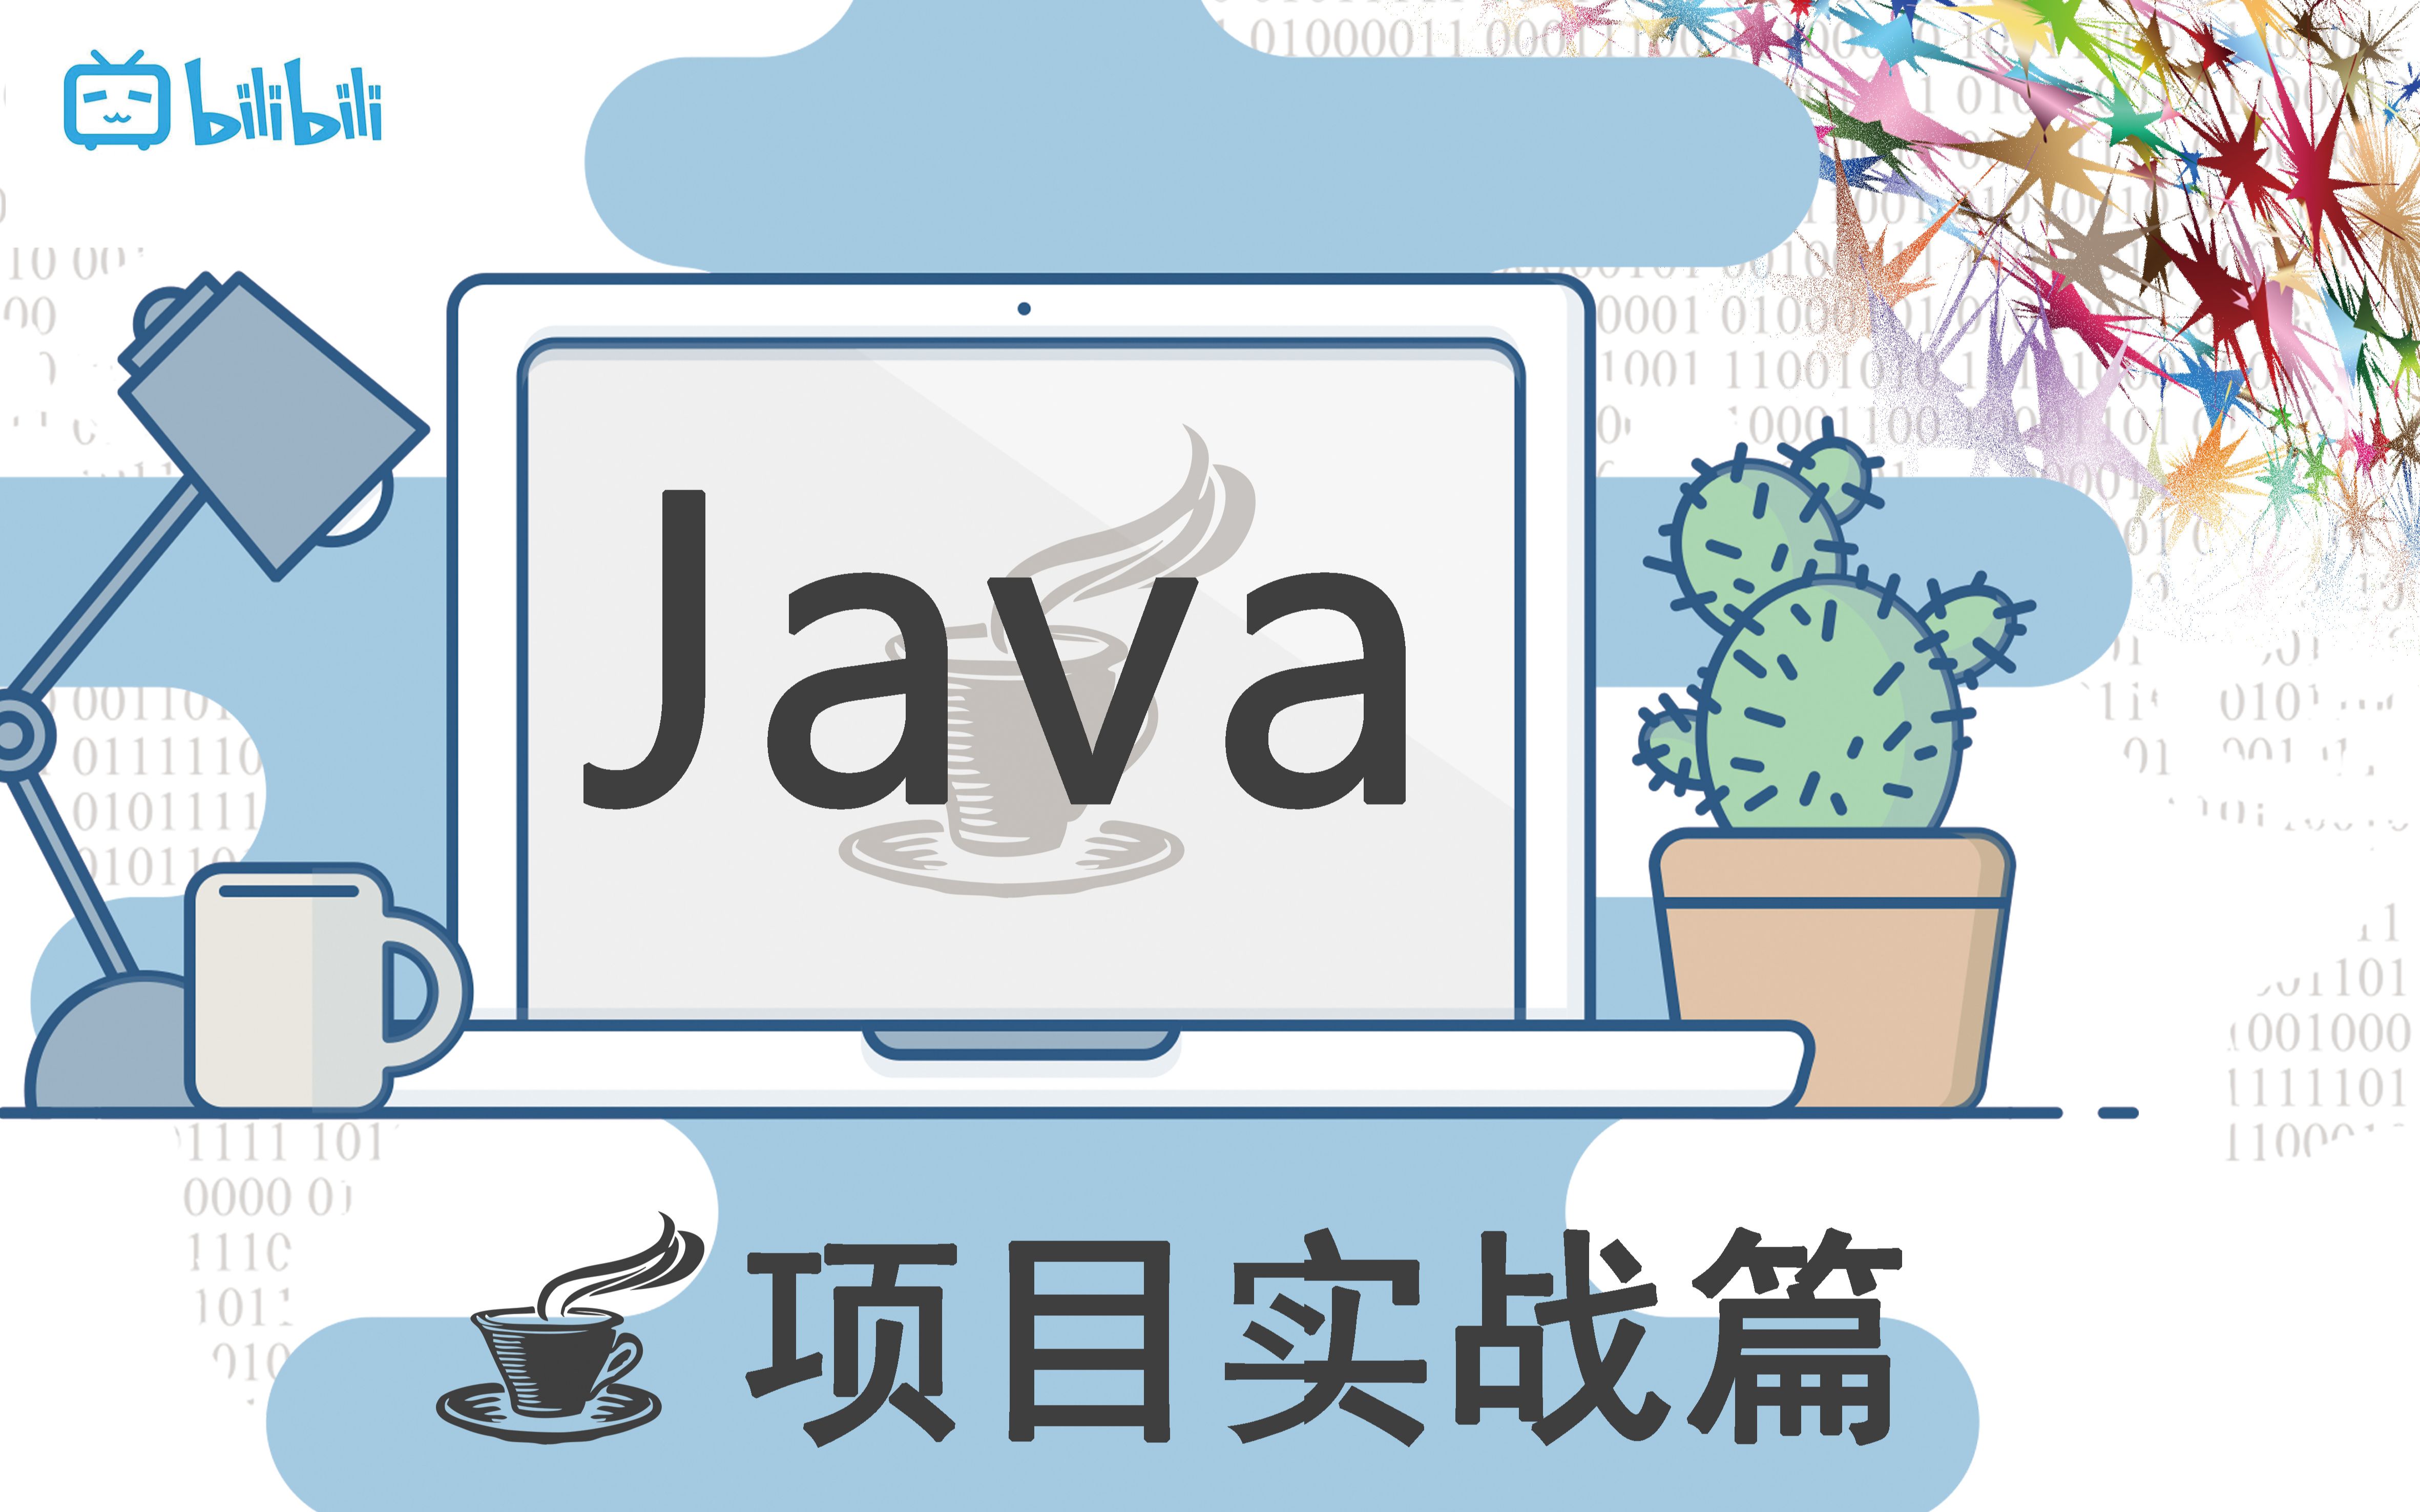 javaweb和springboot 上传图片到服务器，并且能通过url访问图片_javaweb如何将图片上传到服务器并能在web访问-CSDN博客